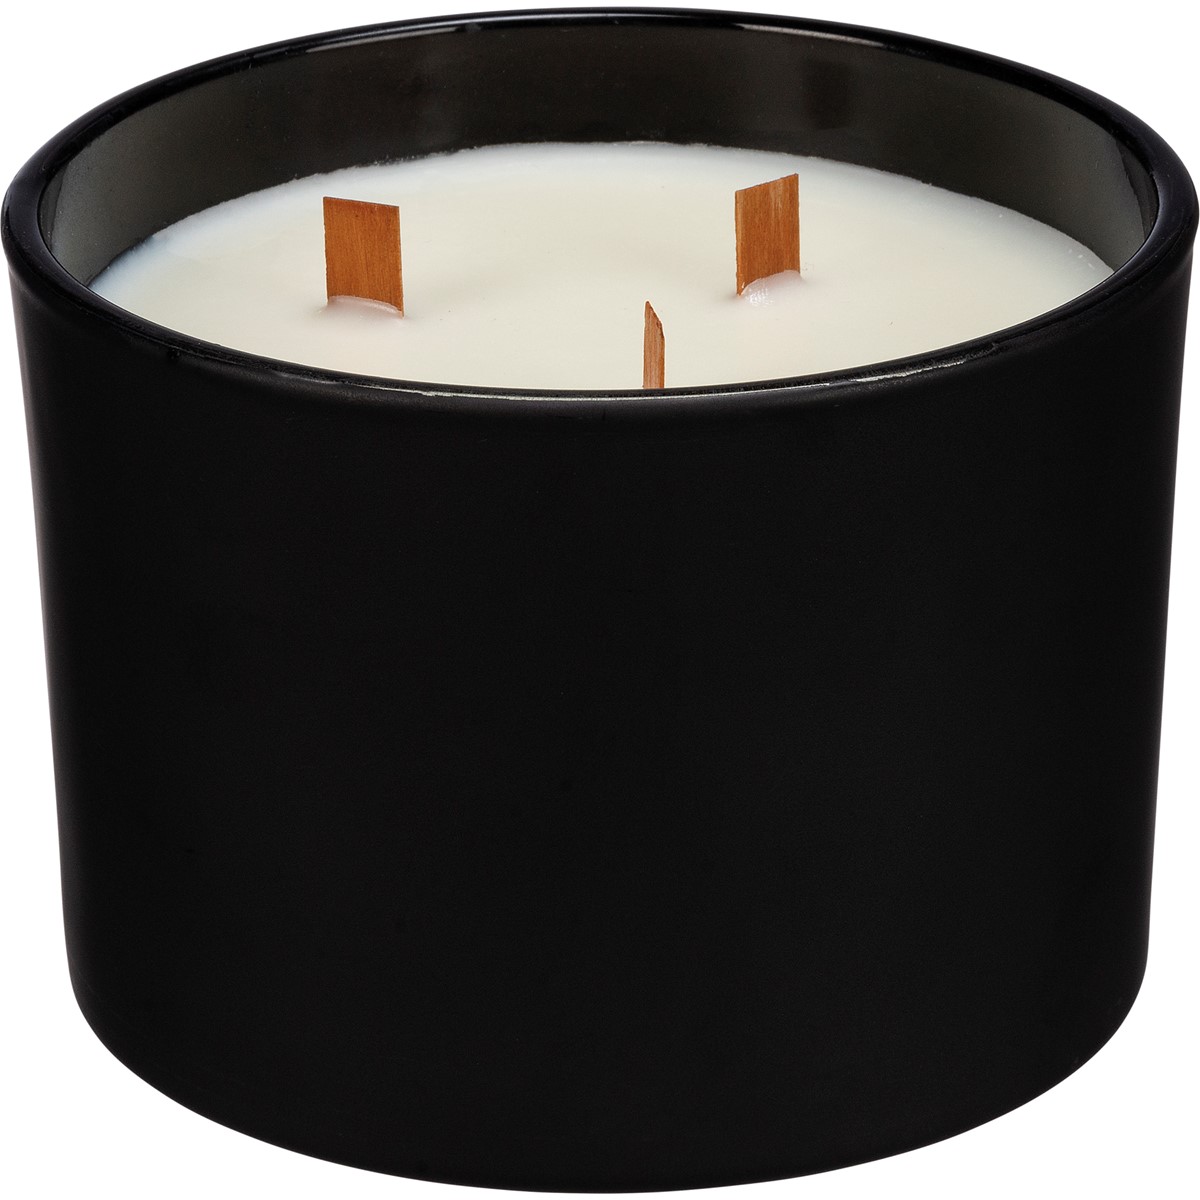 Lush Jar Candle - Soy Wax, Glass, Wood